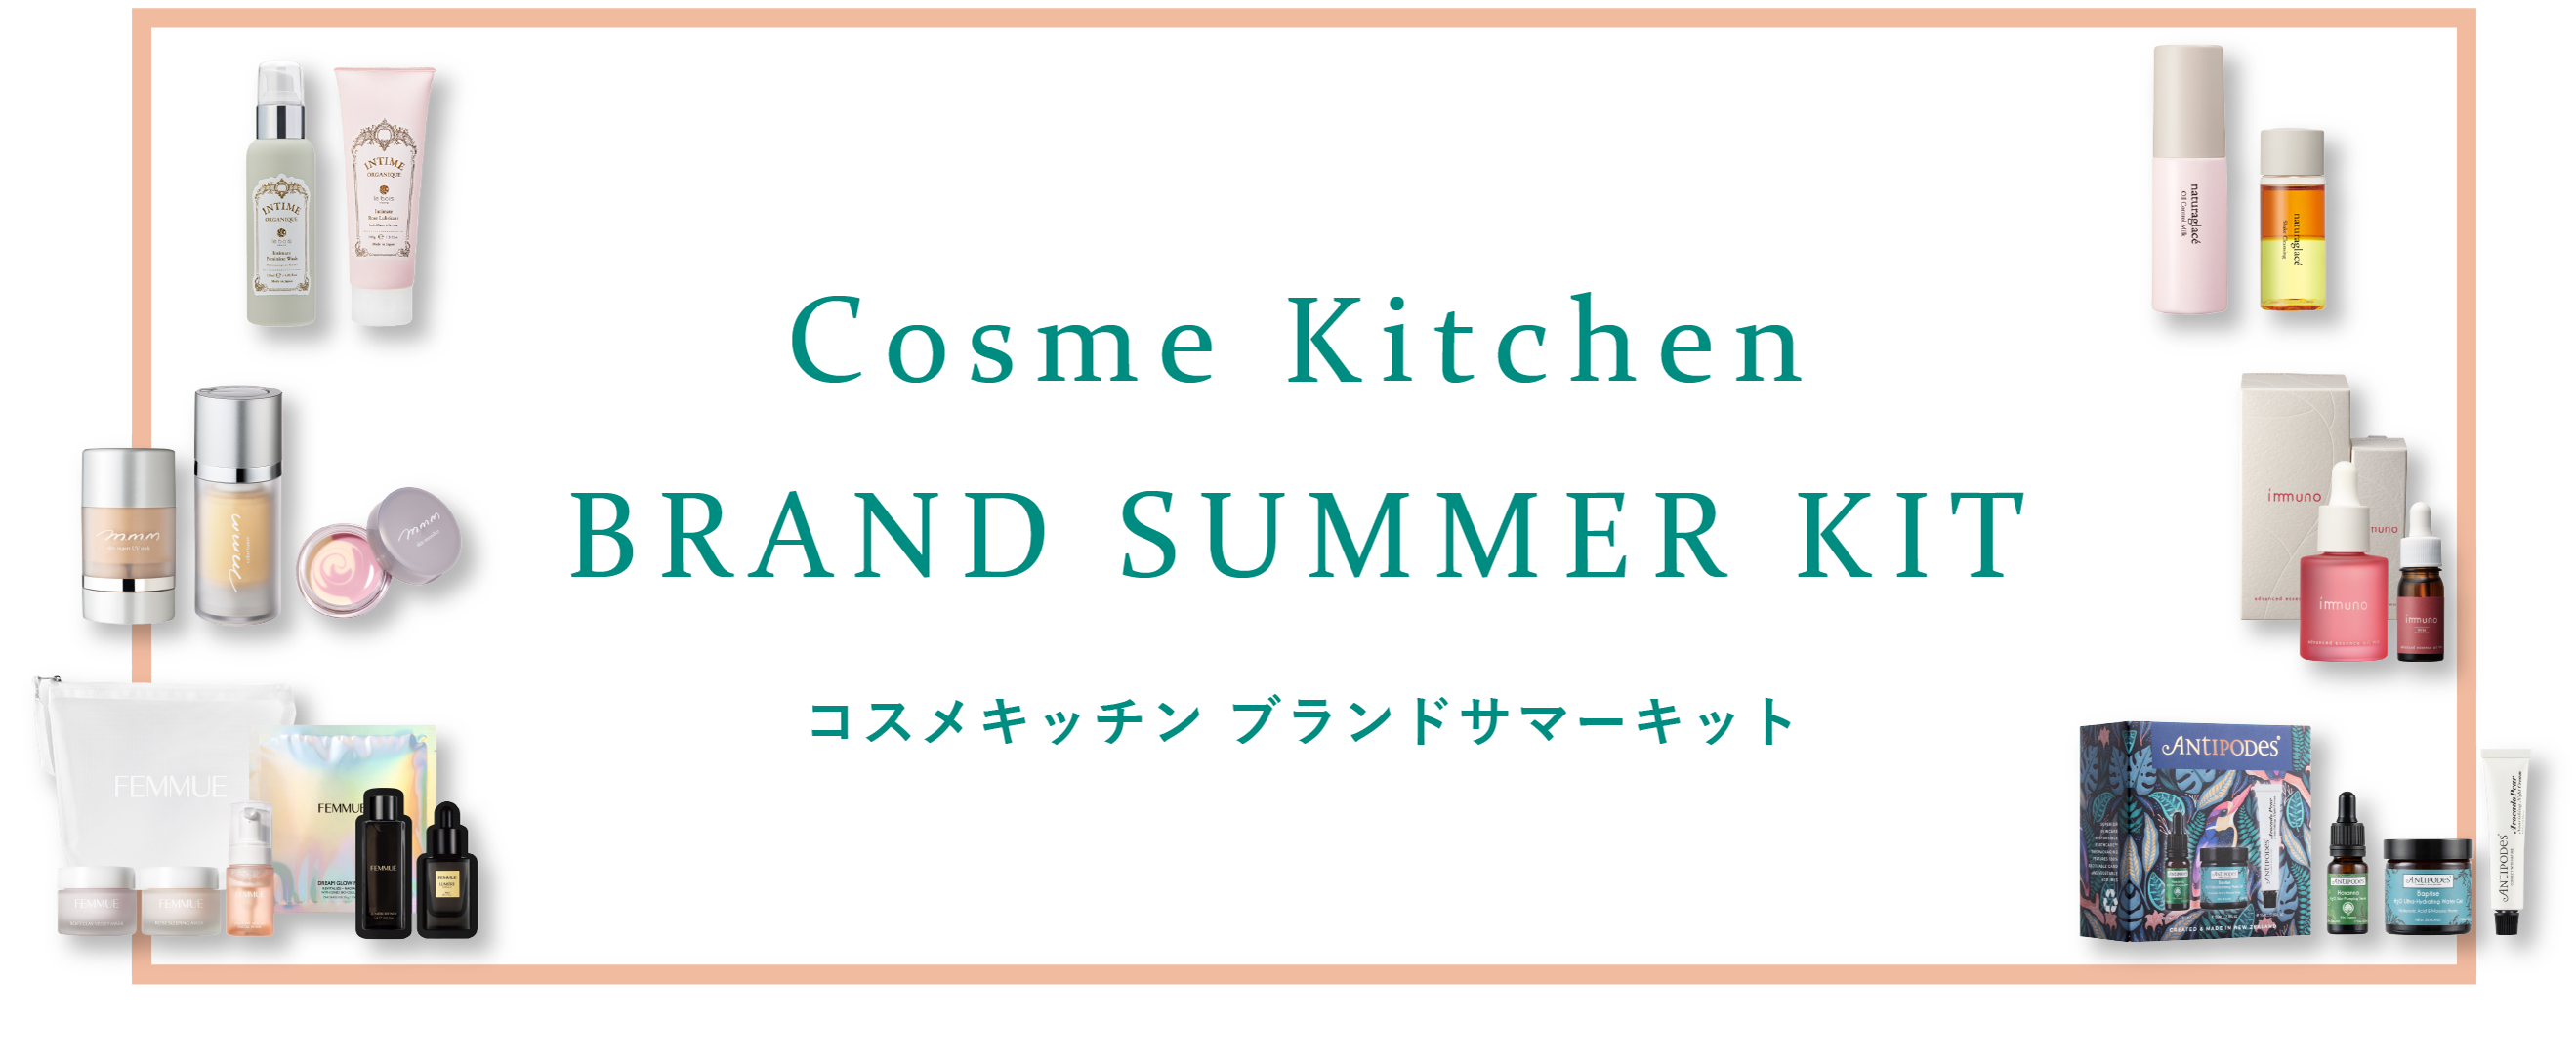 Cosme Kitchen BRAND SUMMER KIT コスメキッチン ブランドサマーキット